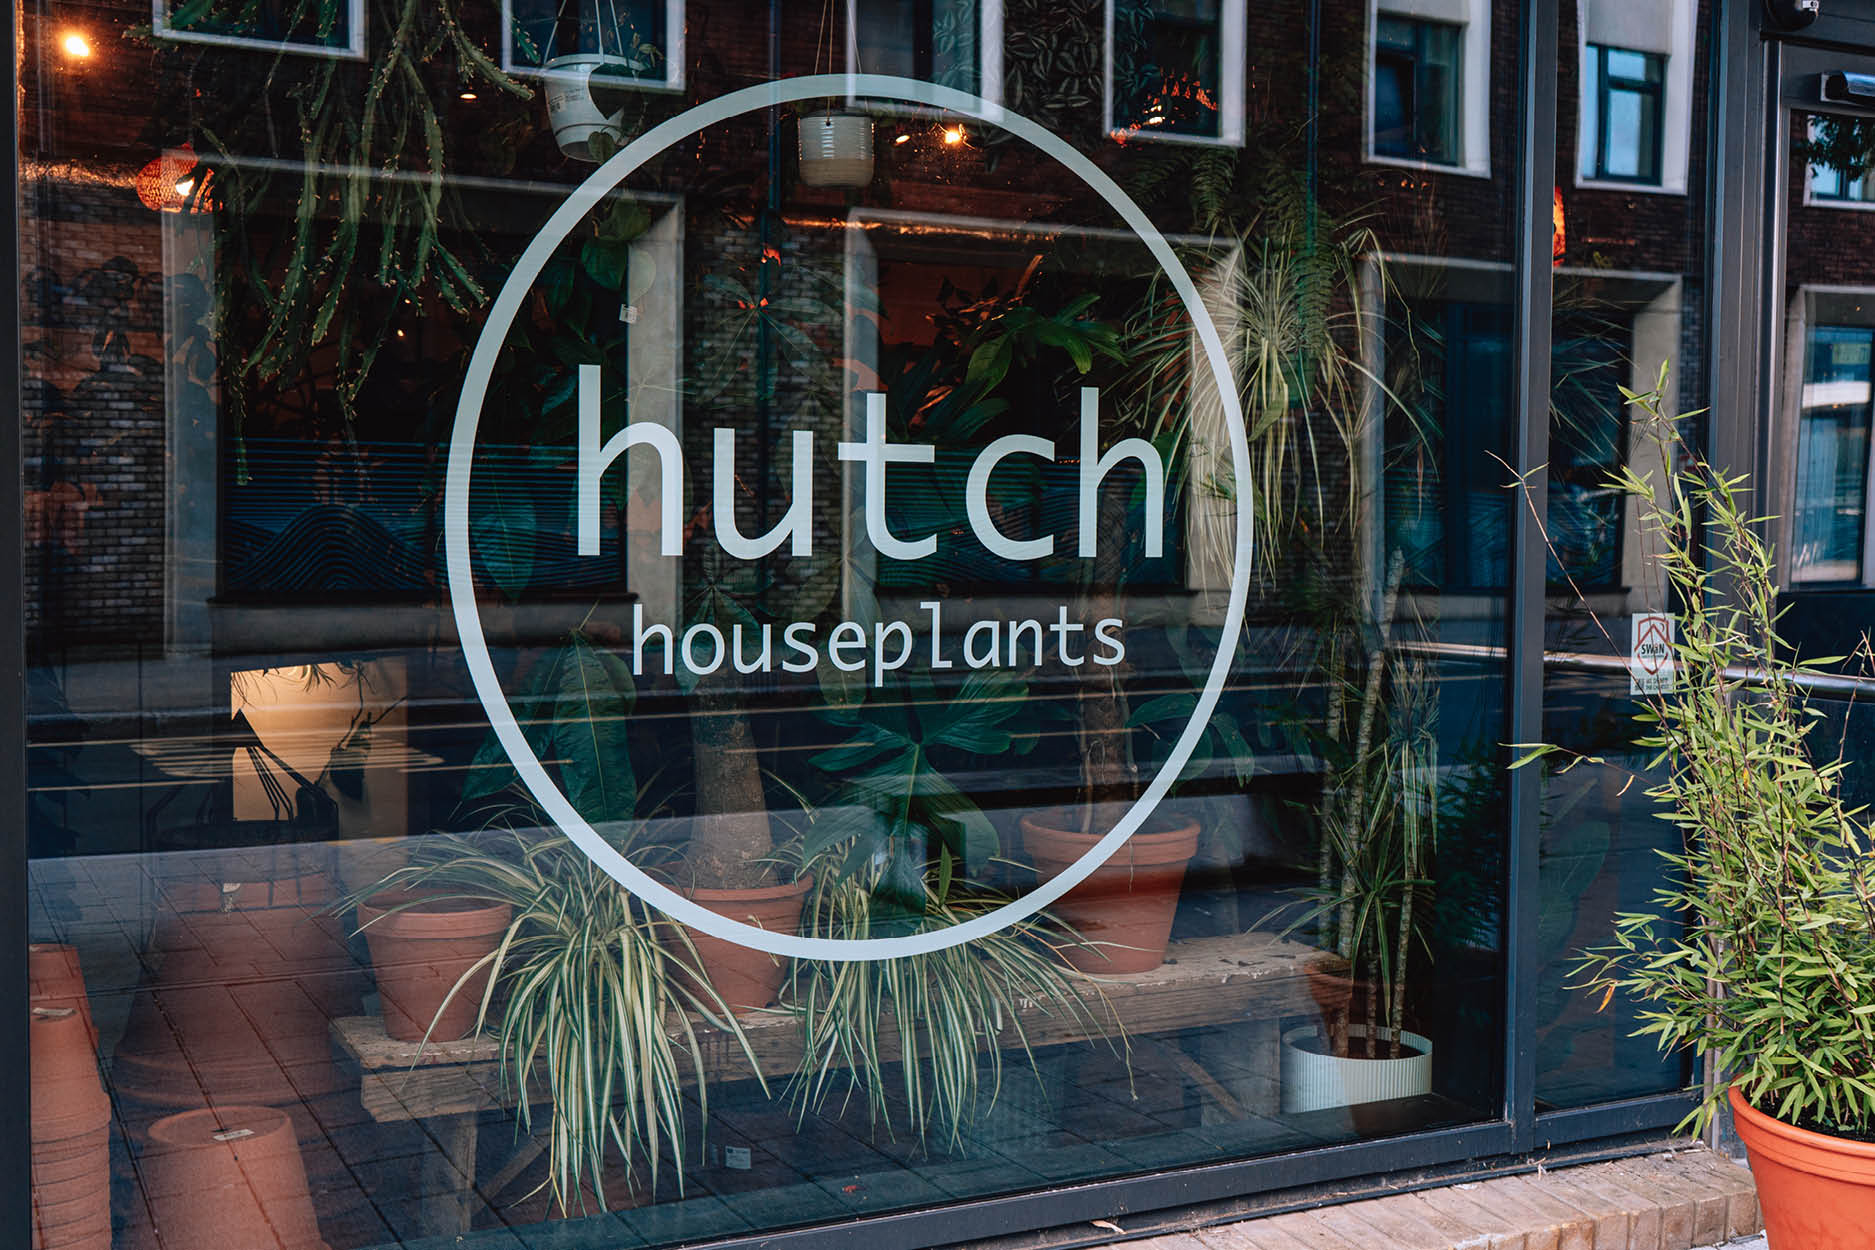 Window graphics fro Hutch Houseplants